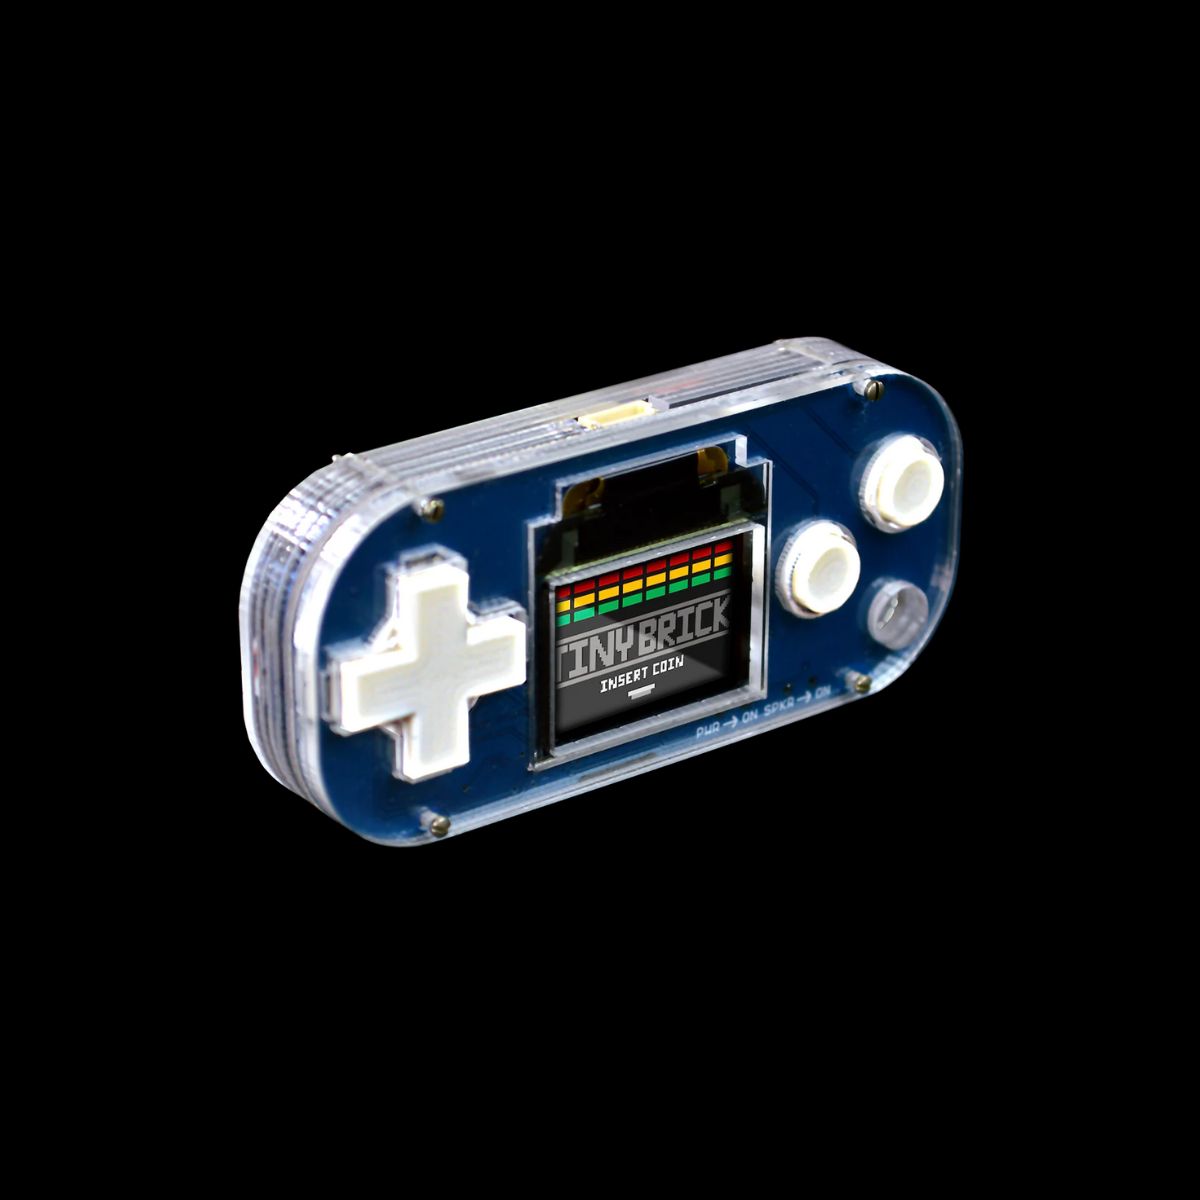 Mini Console Portable - Pocket Arcade Game